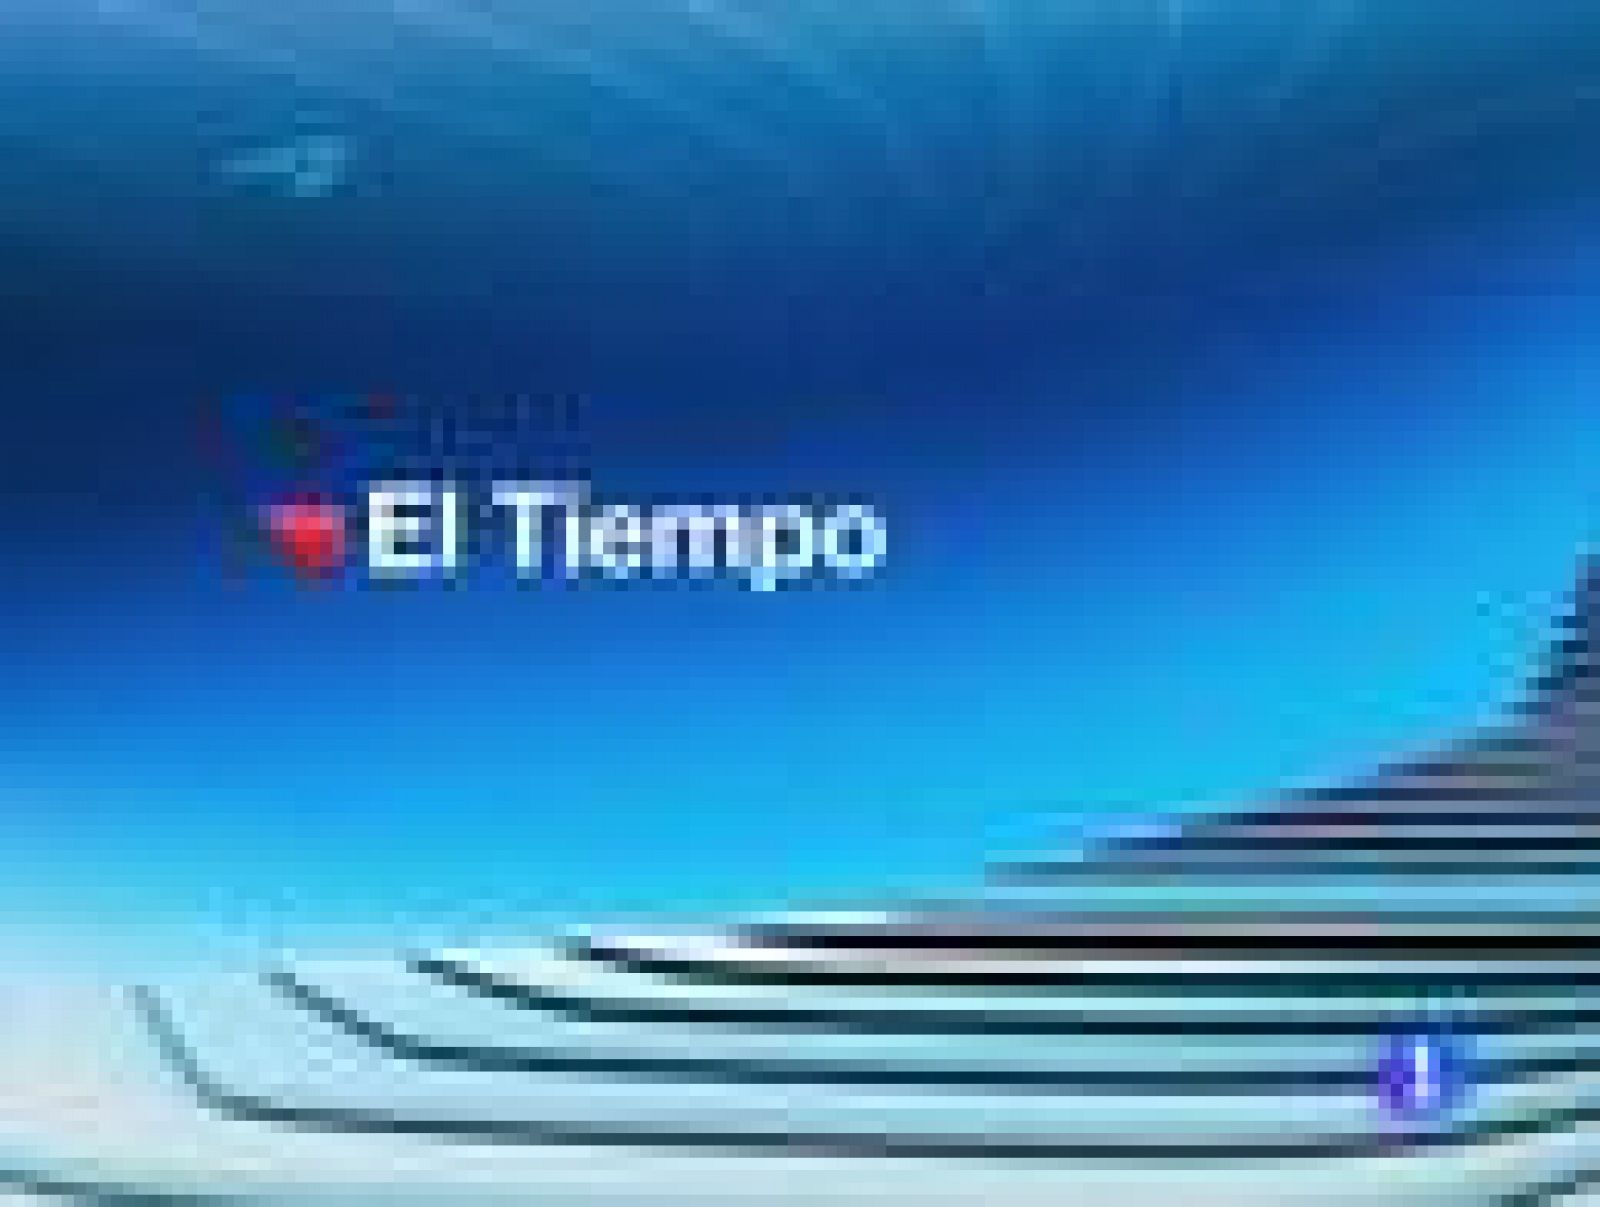 Informativo Telerioja: El tiempo en La Rioja - 09/07/13 | RTVE Play